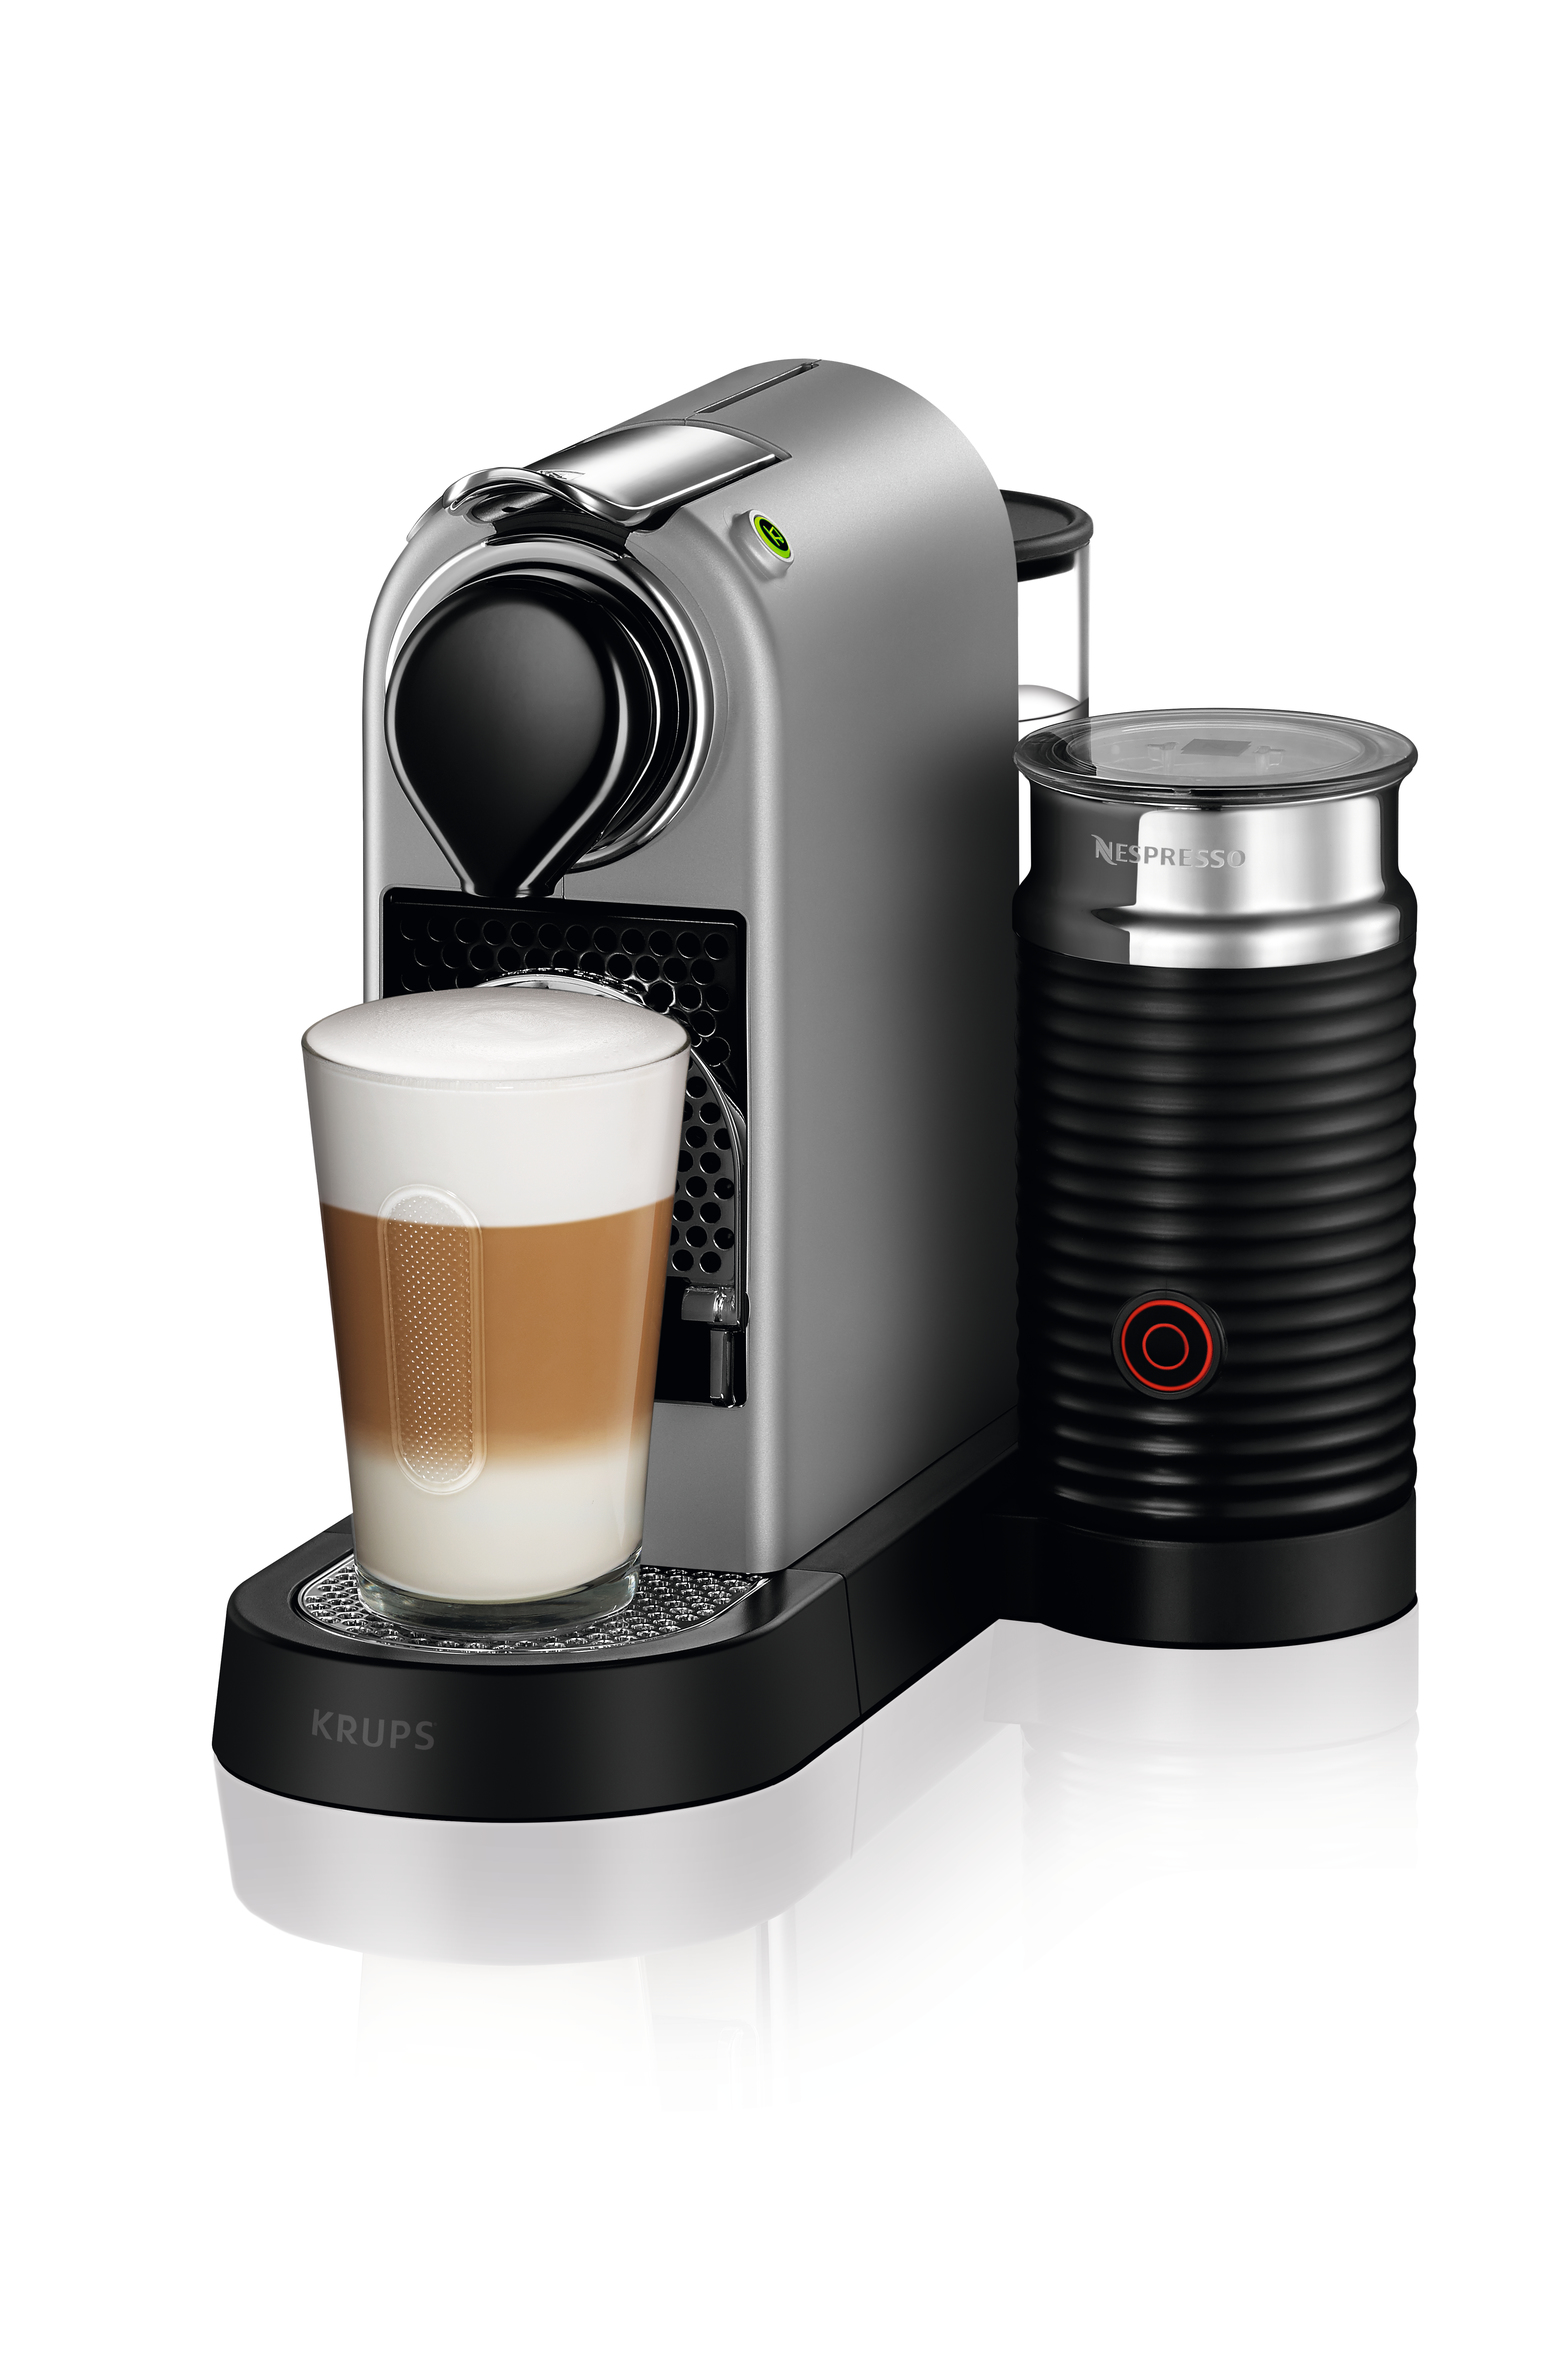 Krups Nespresso XN761B coffee maker